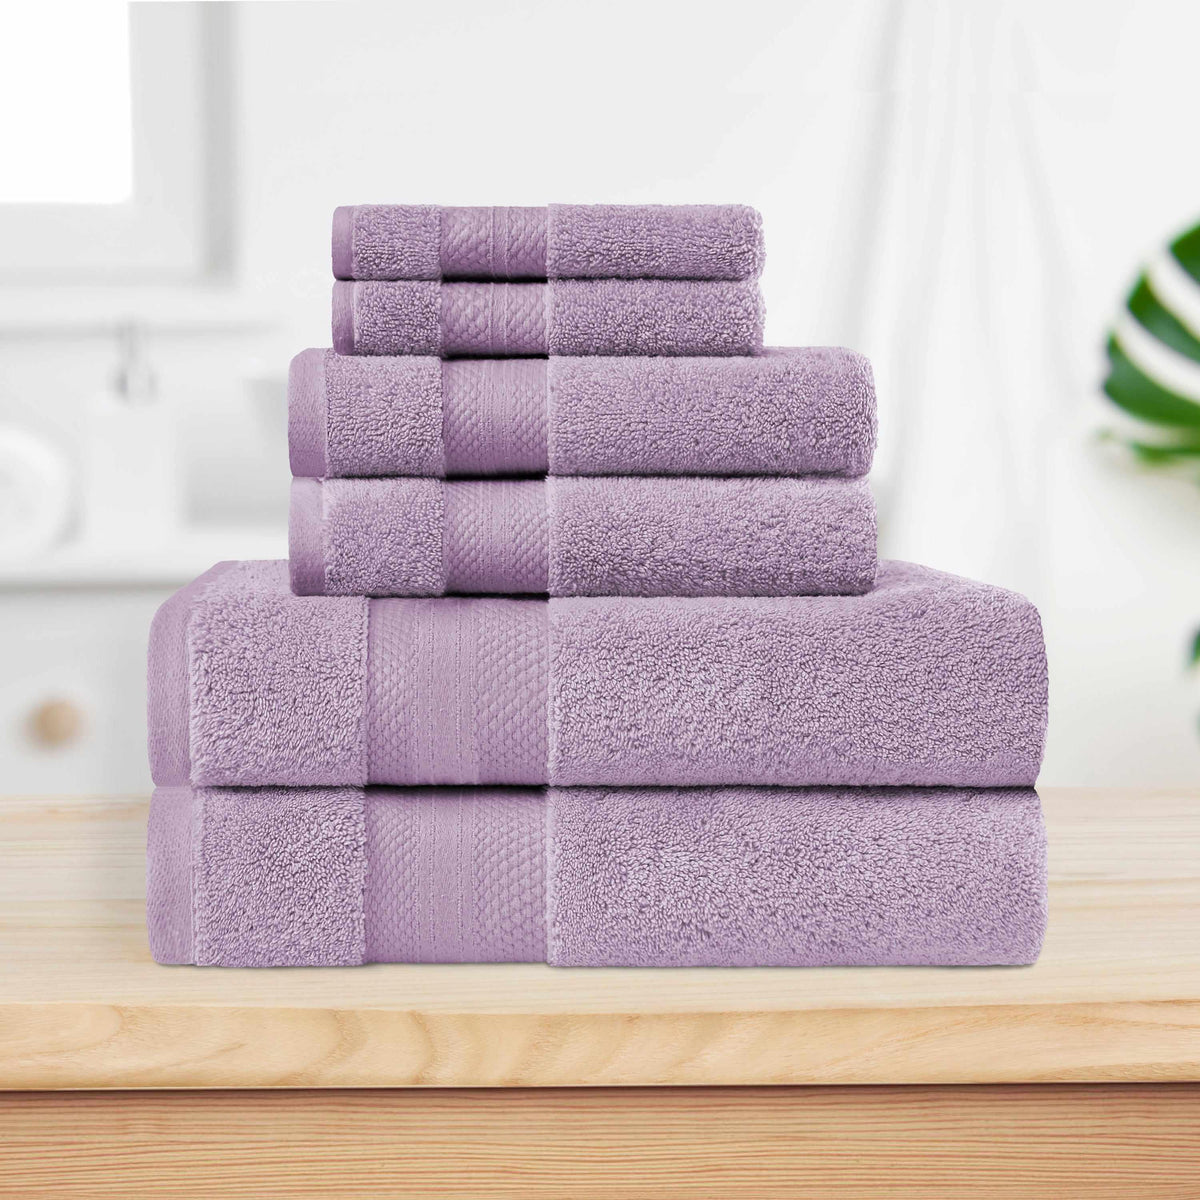  Superior Premium Turkish Cotton Assorted 6-Piece Towel Set - Wisteria